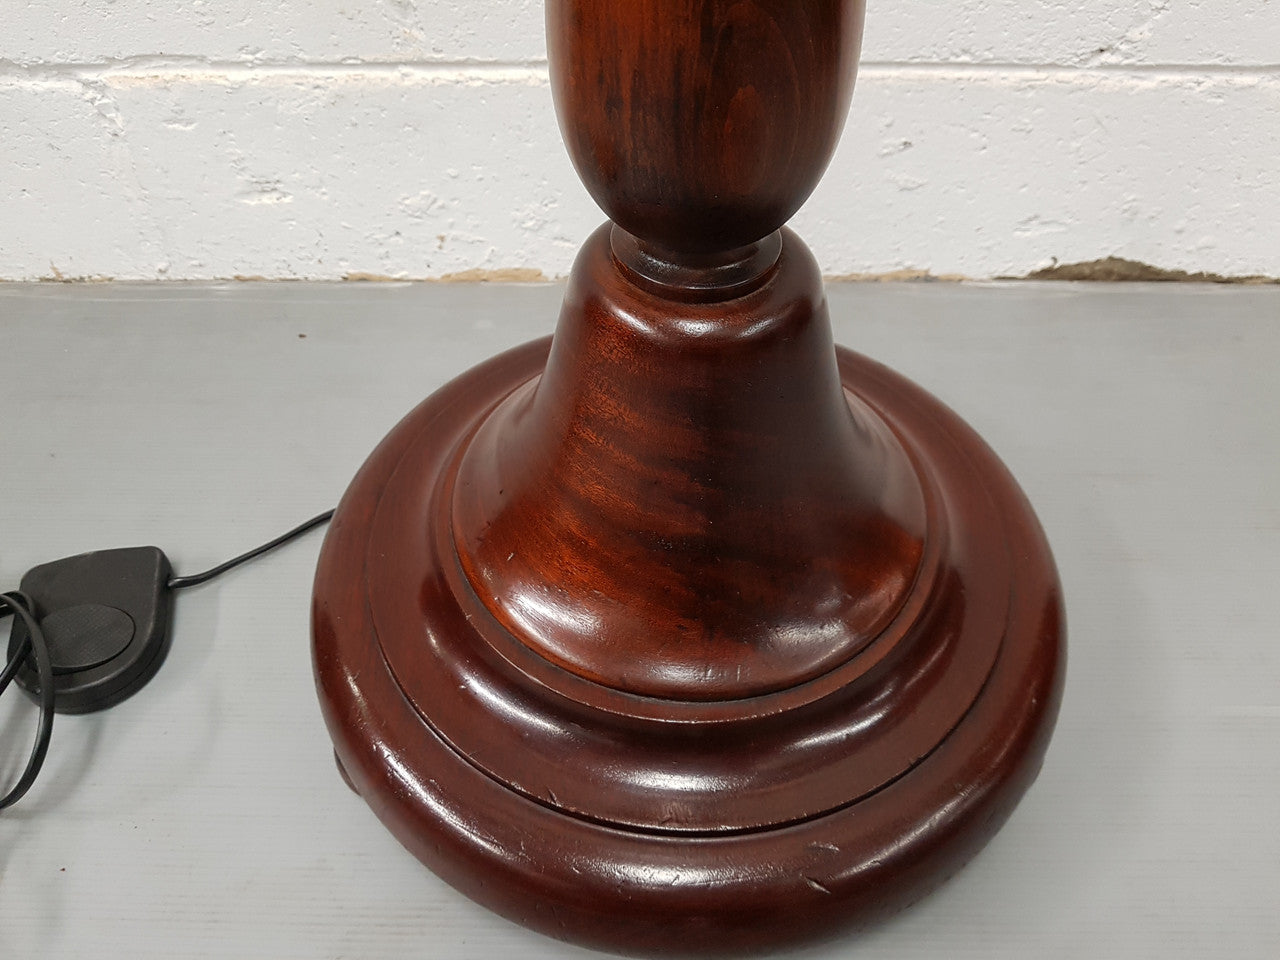 Antique Mahogany Standard Lamp